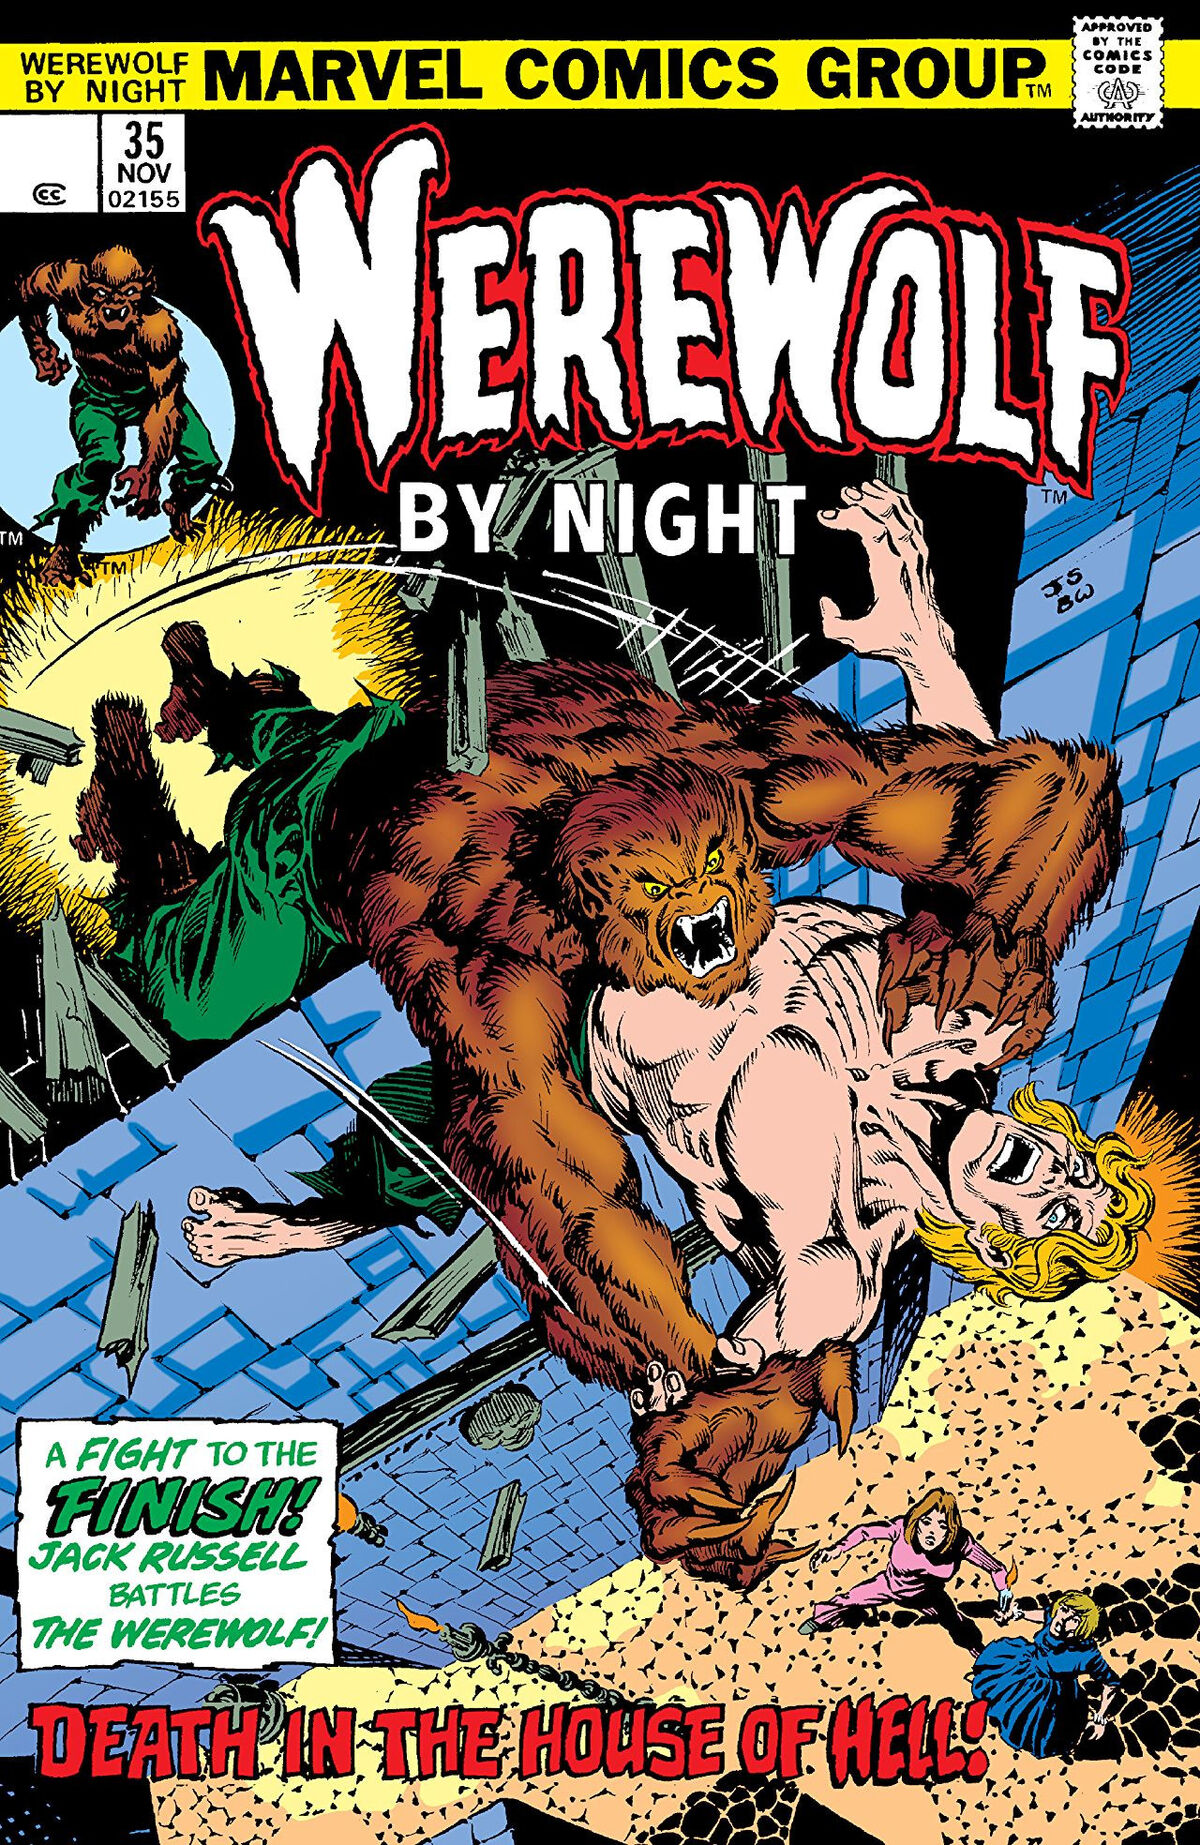 Werewolf by Night Vol 1 4, Marvel Database